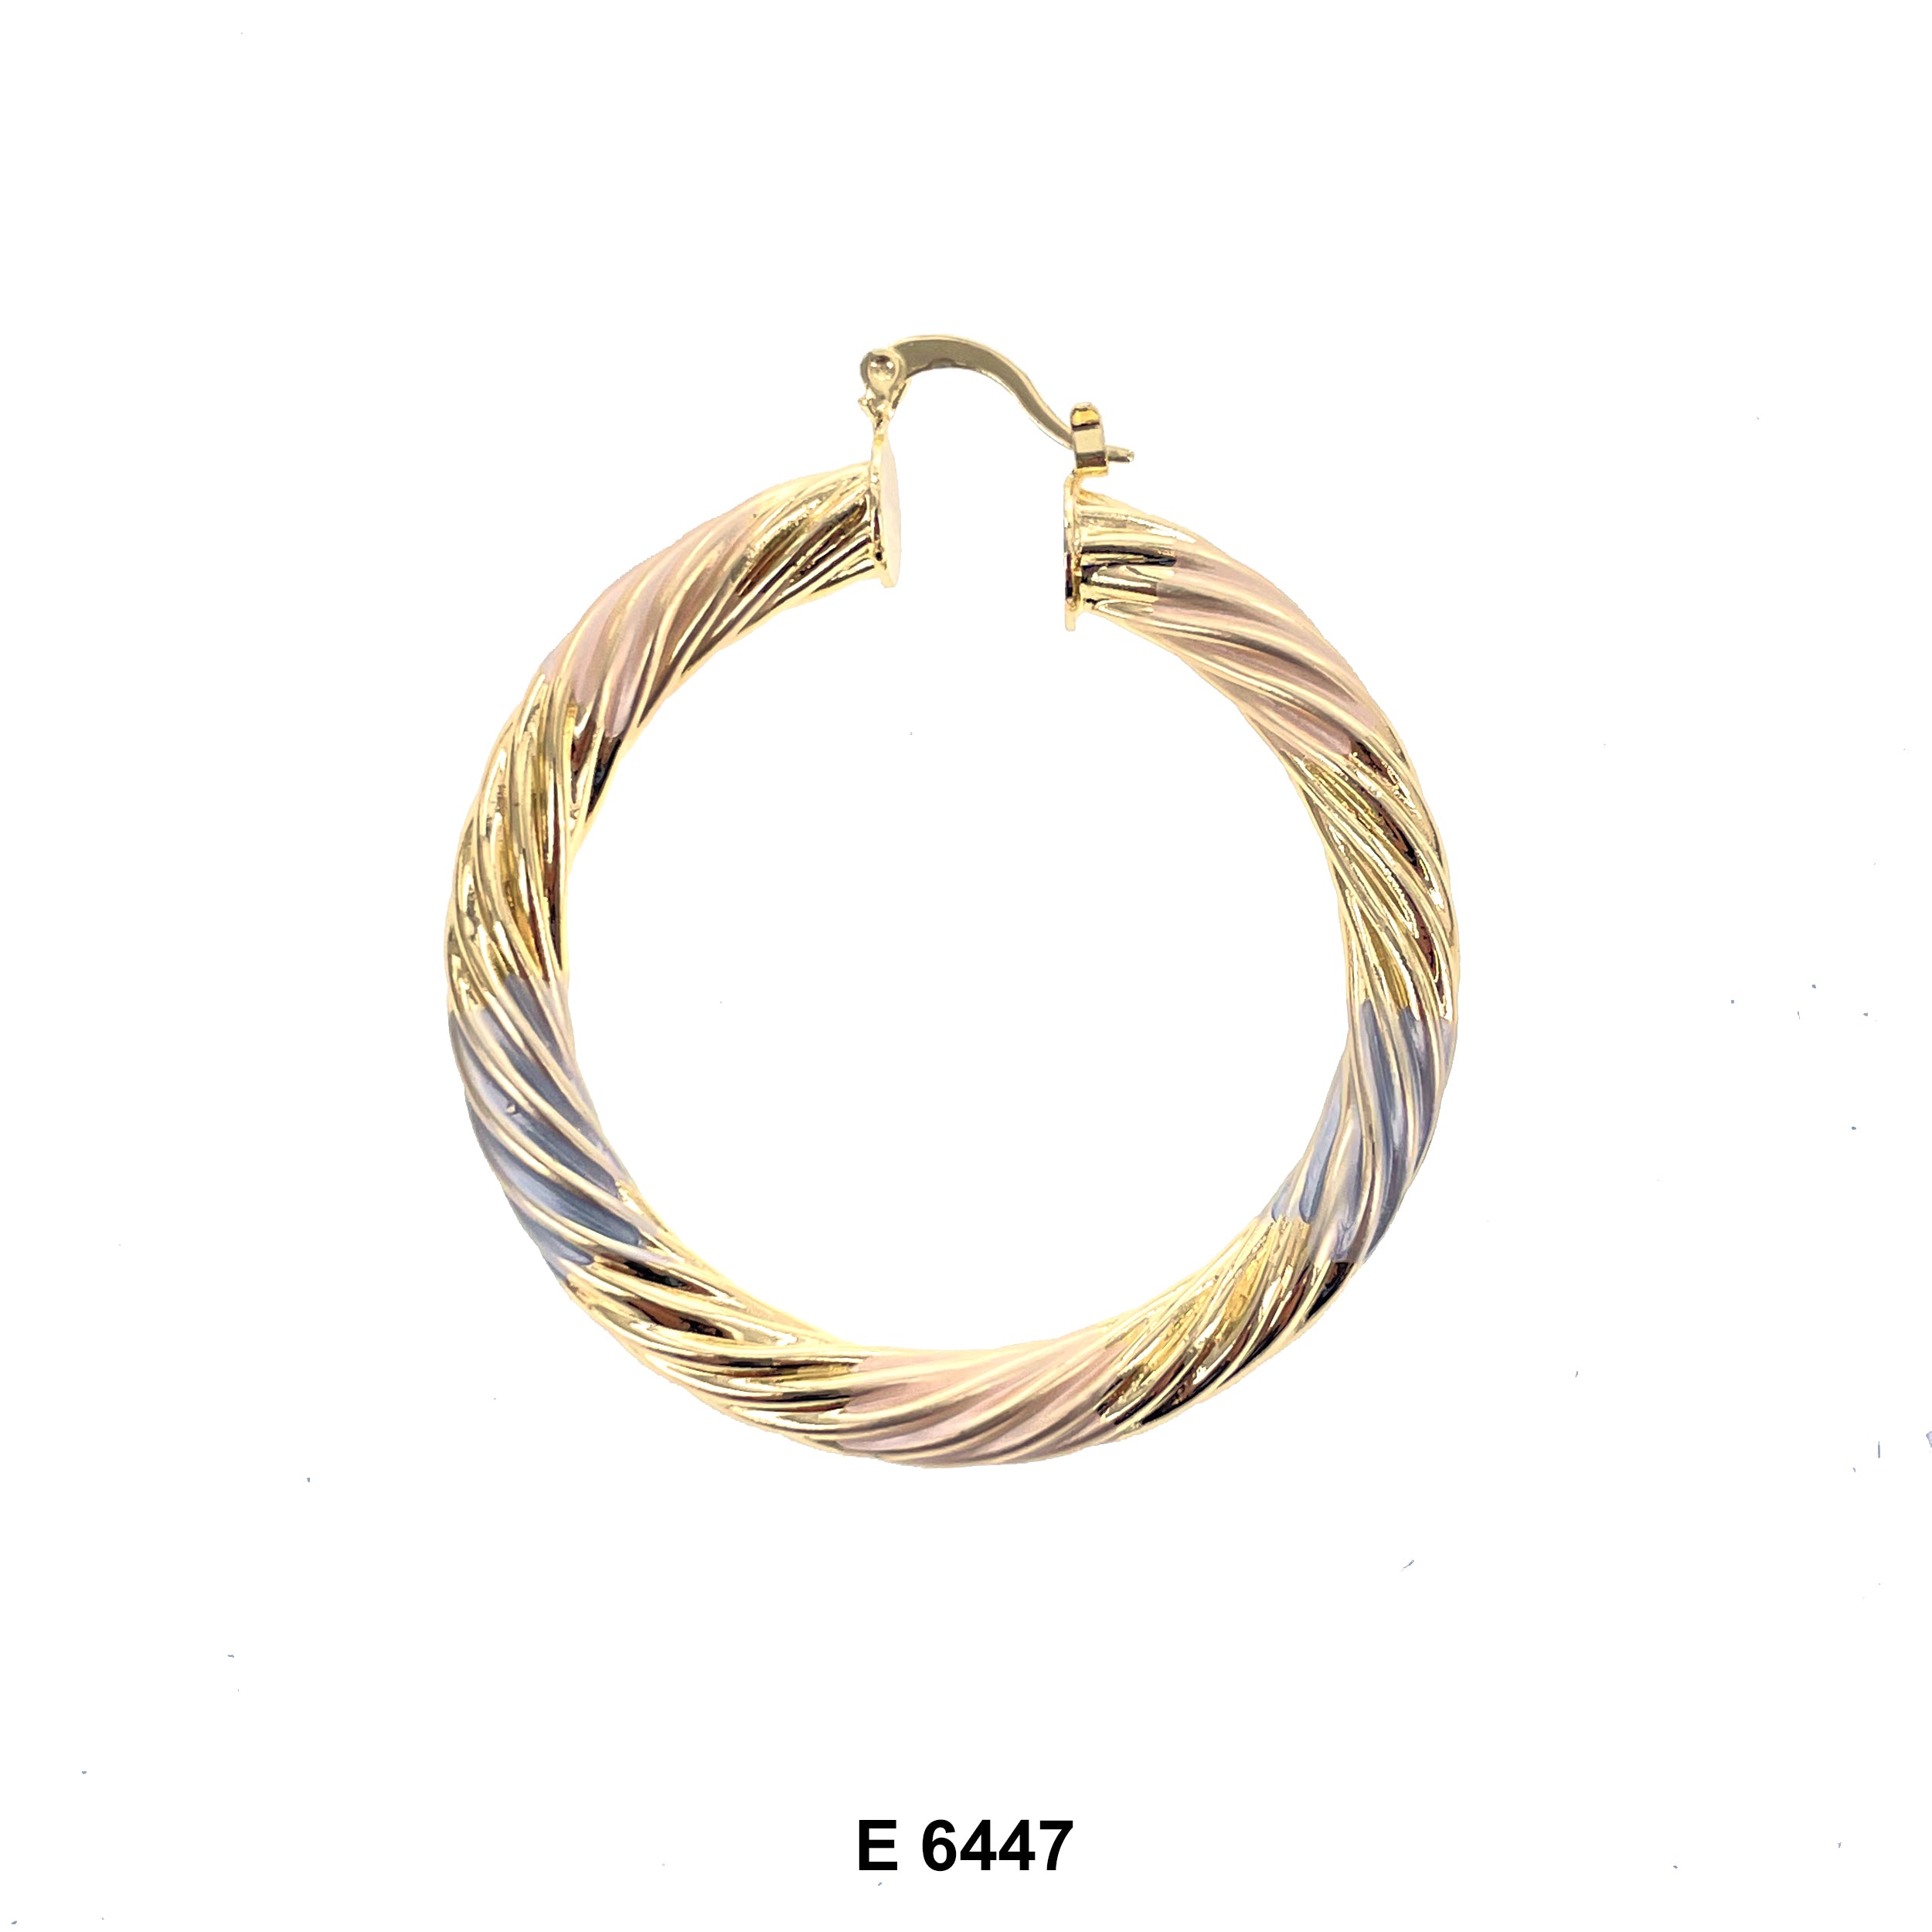 Engraved Hoop Earrings E 6447